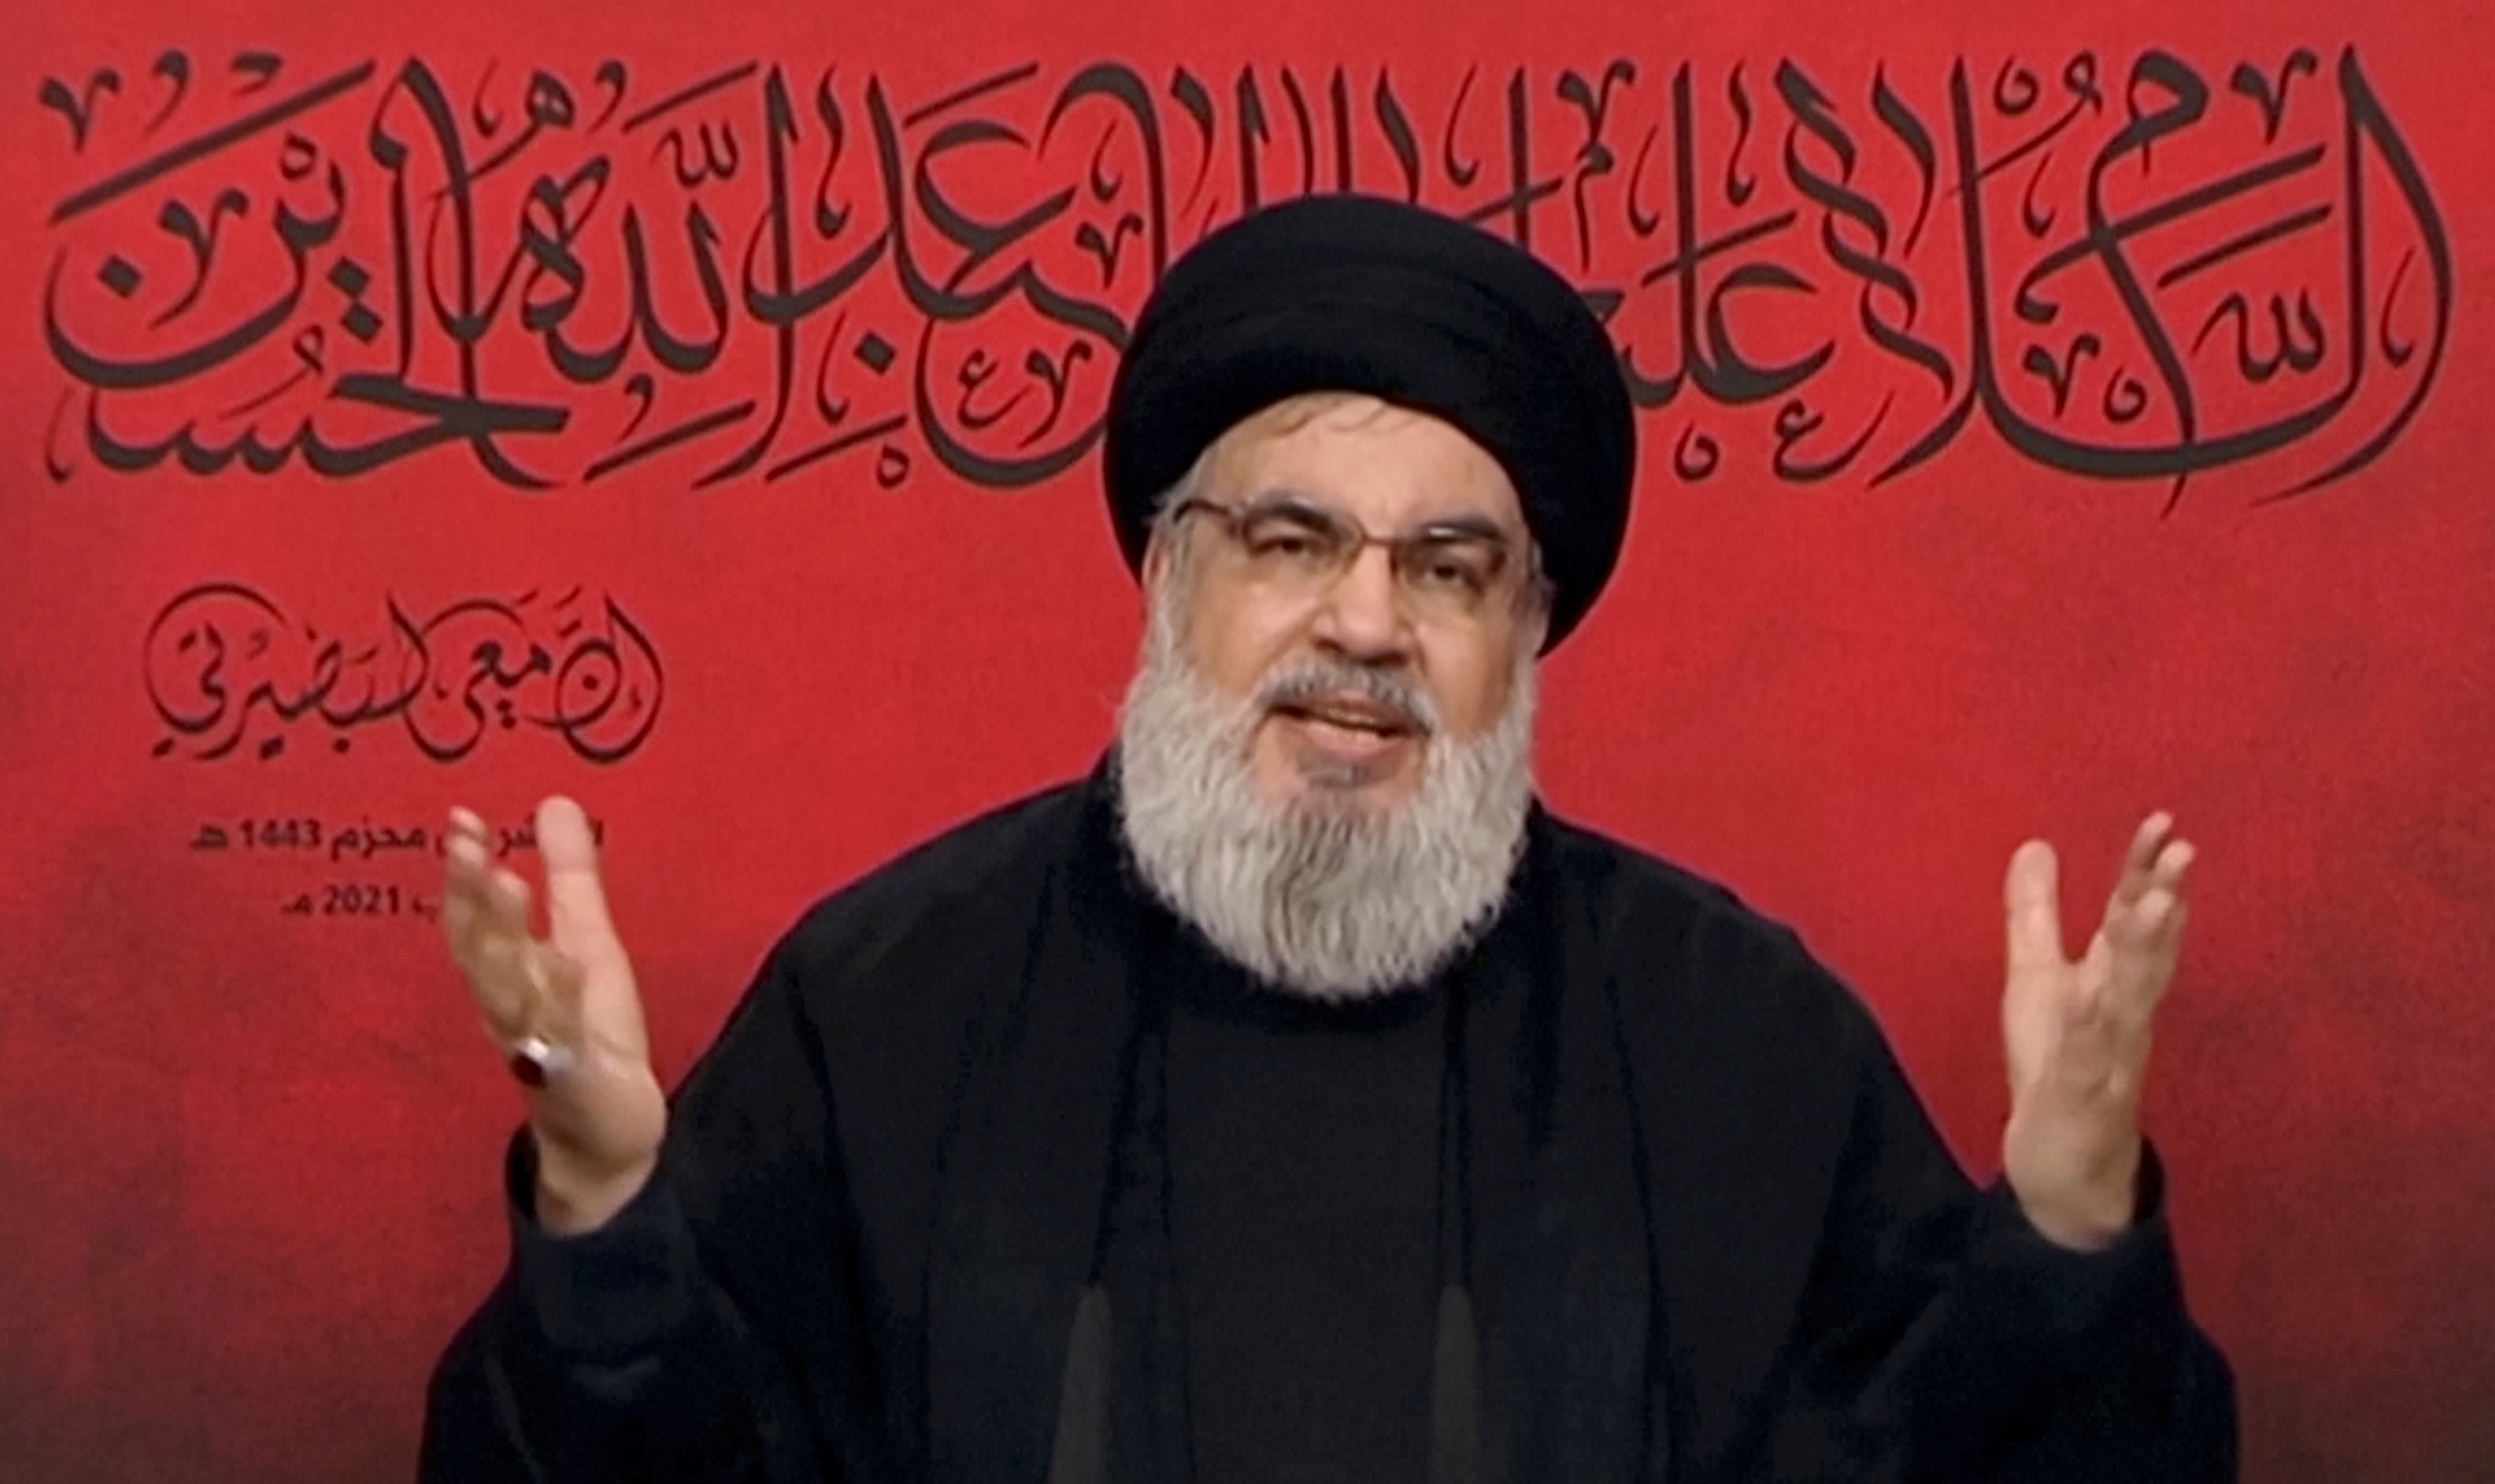 Lebanon's Hezbollah leader Sayyed Hassan Nasrallah speaks through a screen during a religious ceremony marking Ashura